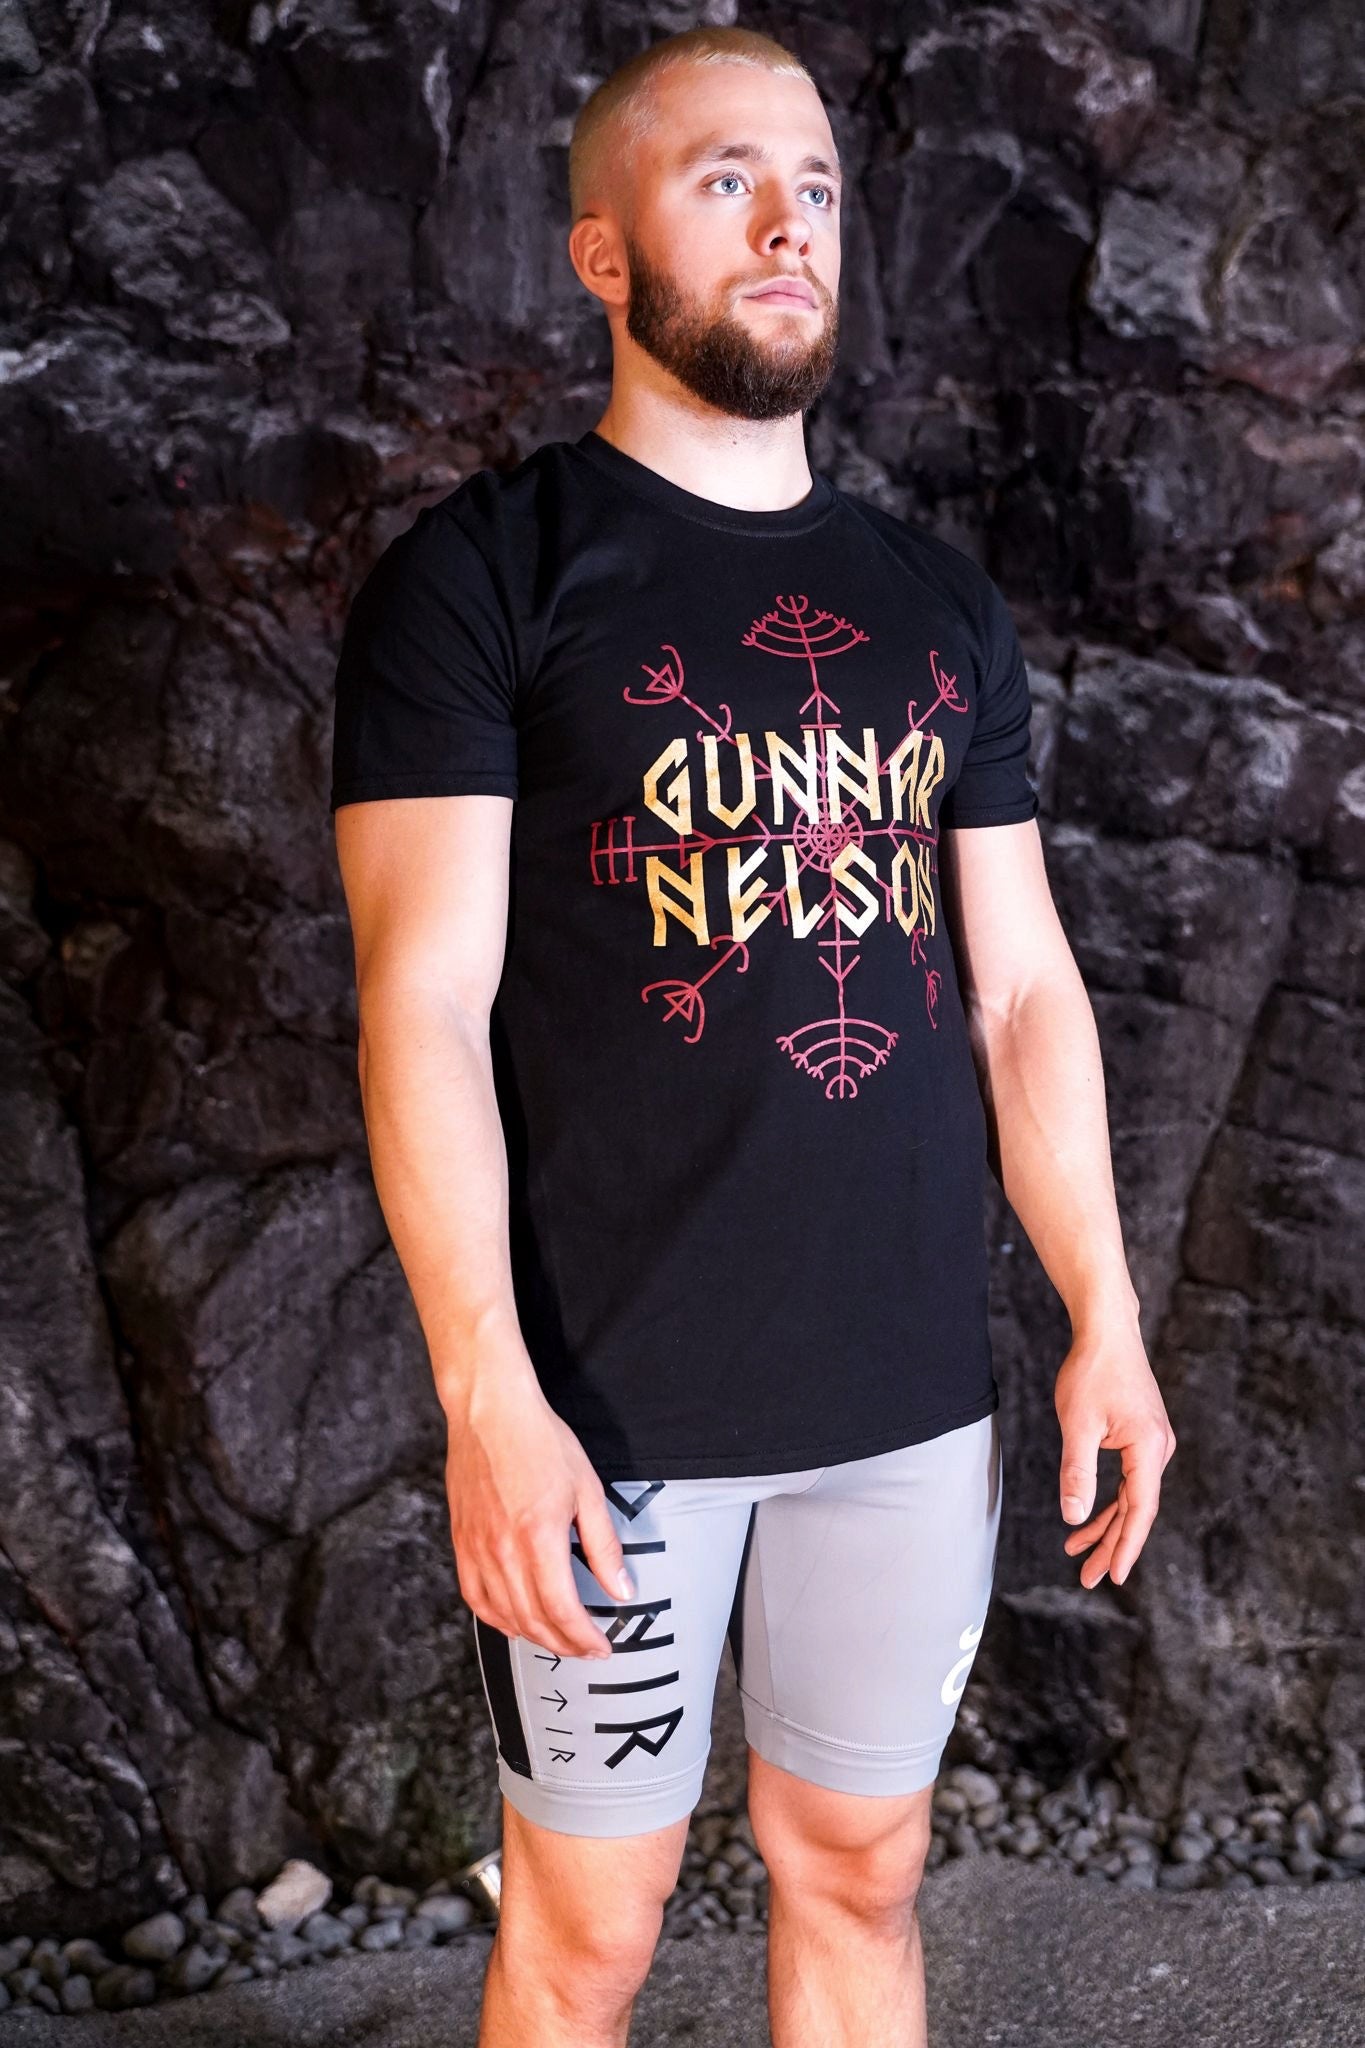 Gunnar Nelson T-shirt Special Edition 2018